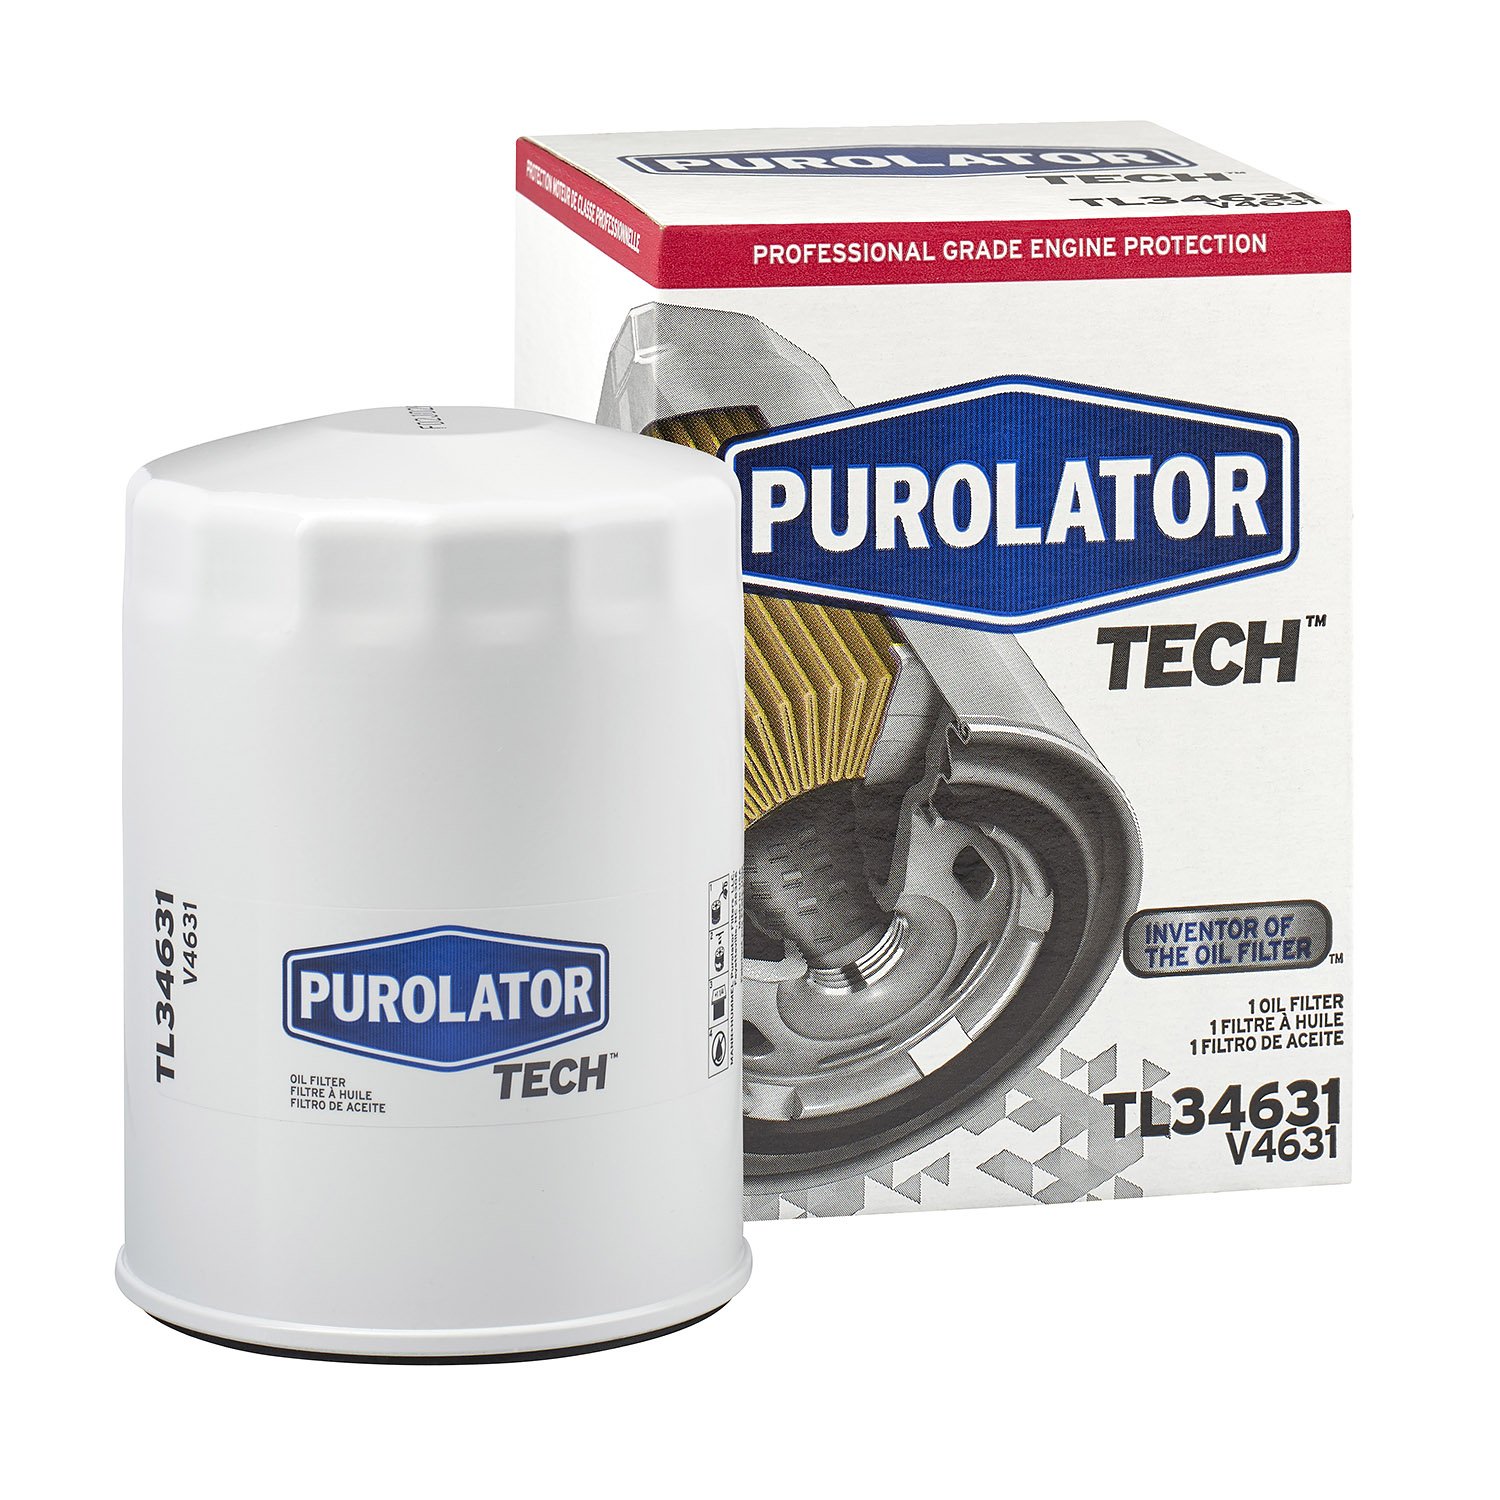 Purolator Tech Spin On Ölfilter von Purolator